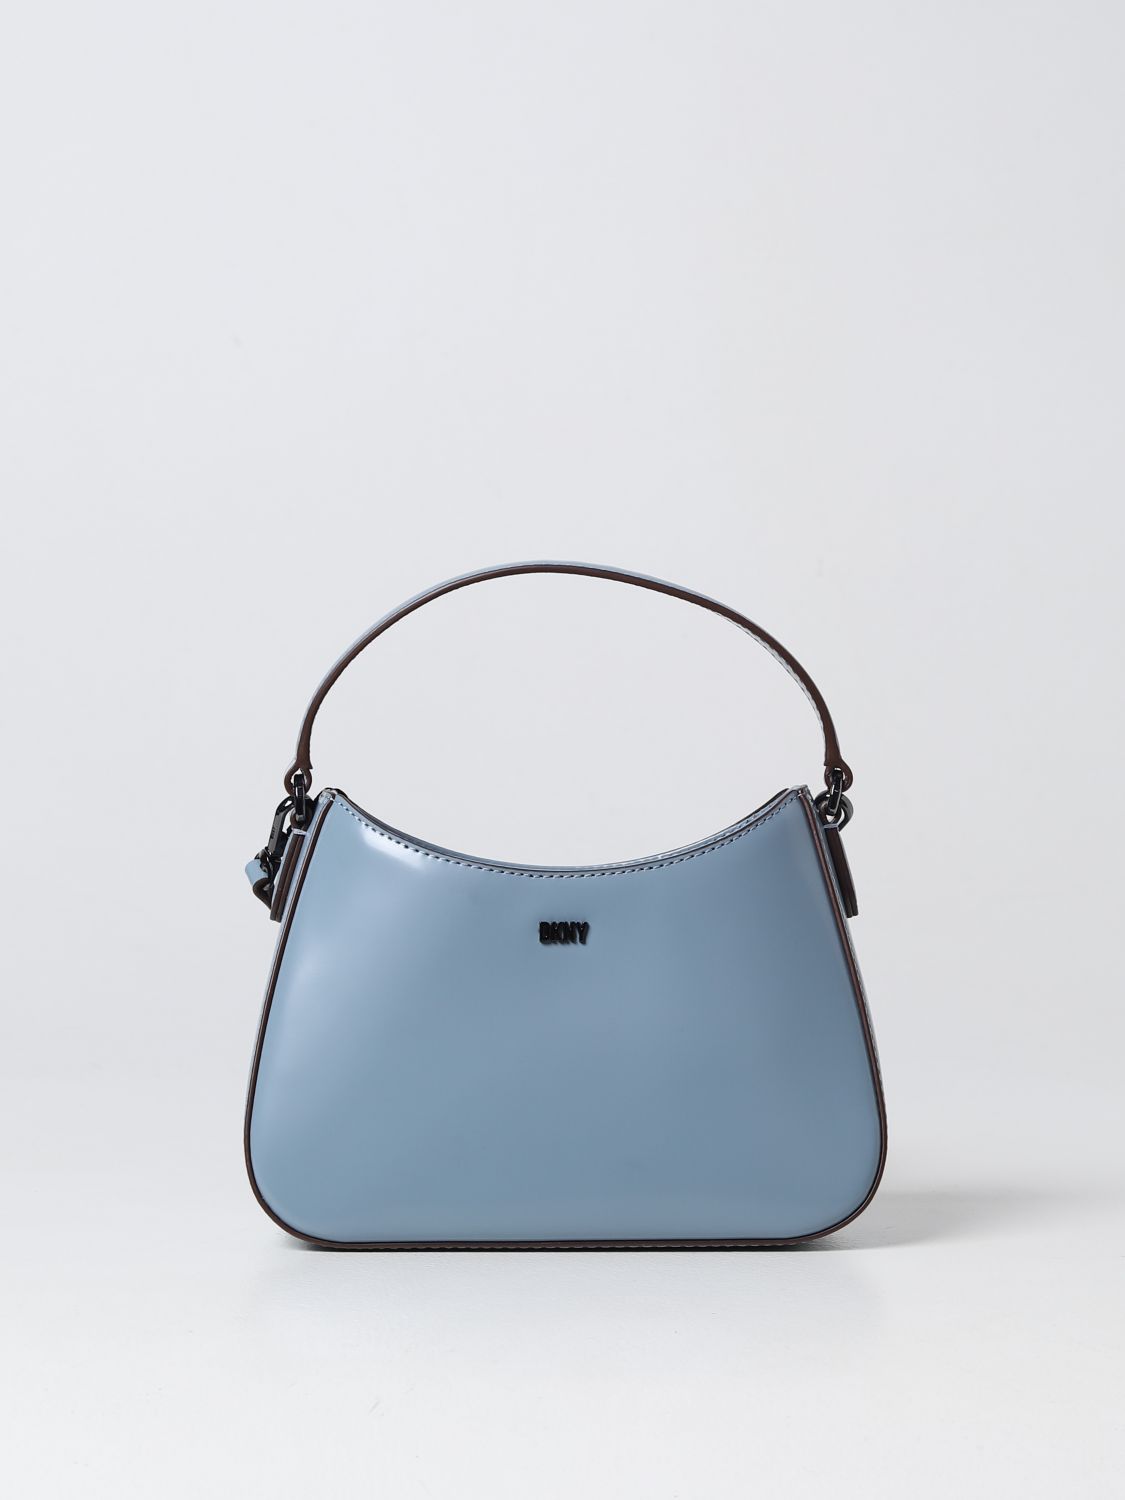 DKNY Twiggy Crossbody Bag, Black/Silver: Handbags: Amazon.com